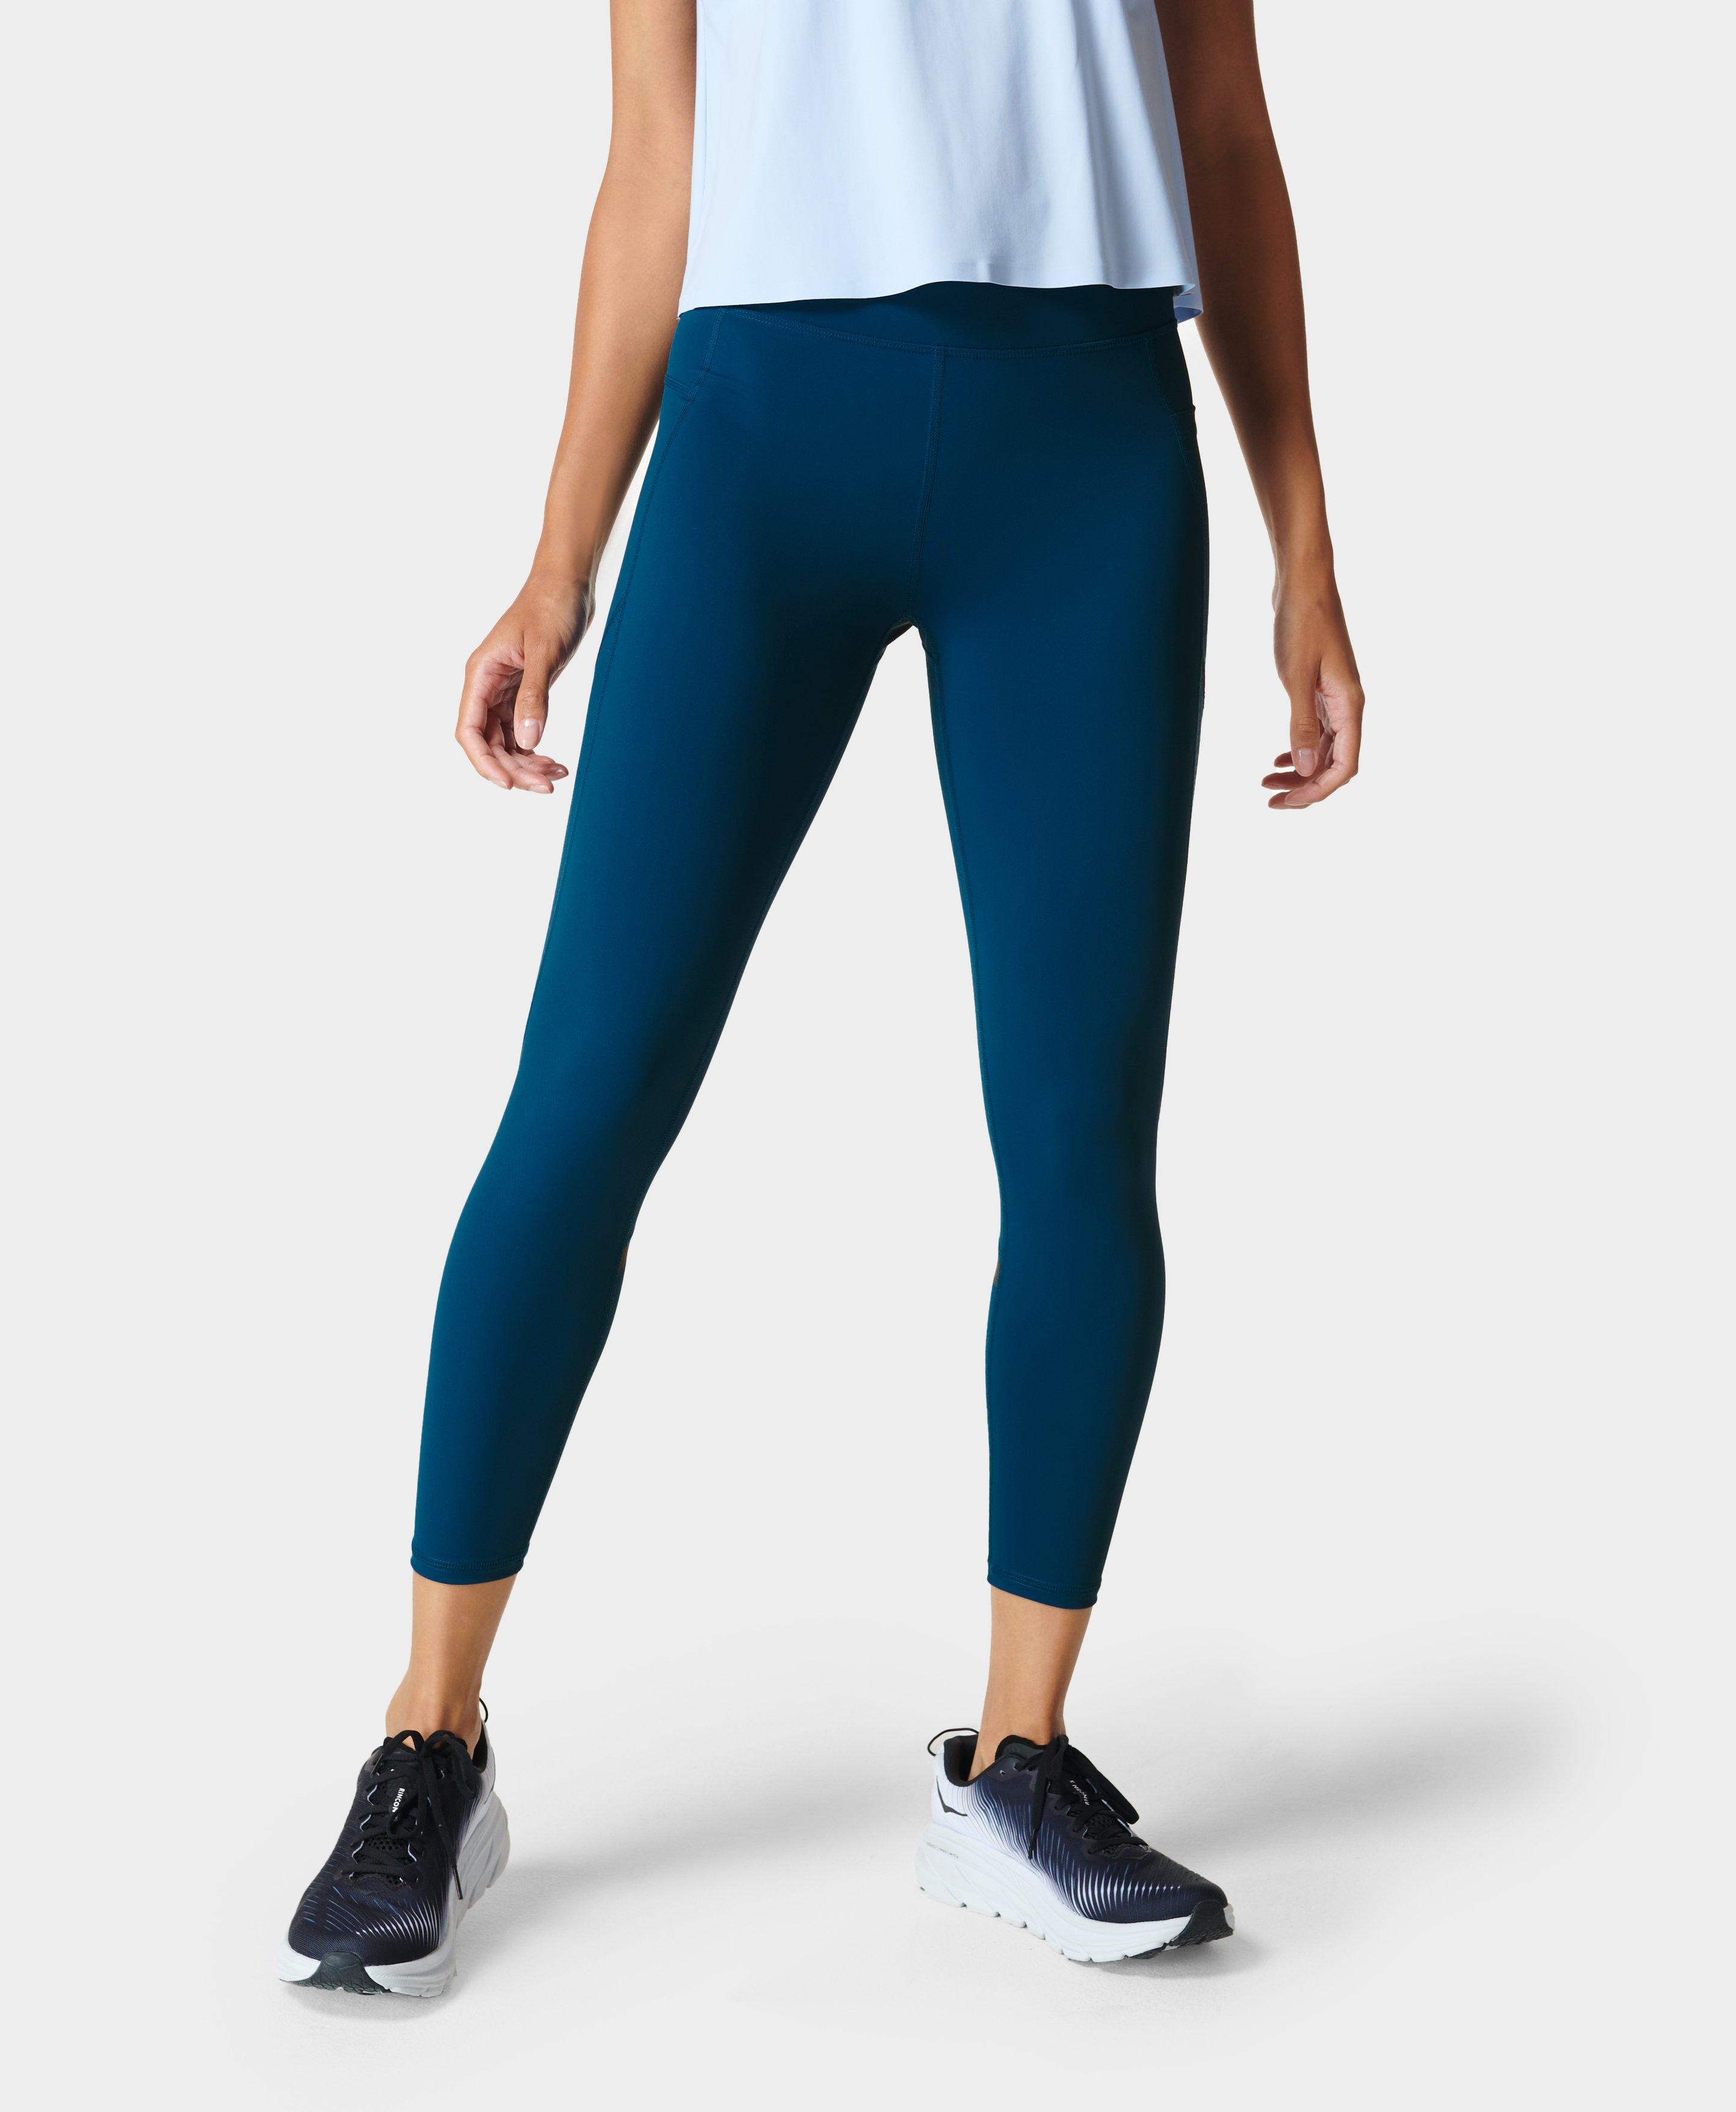 Nike Yoga Women's Light Blue 'Move To Zero' 7/8 Leggings